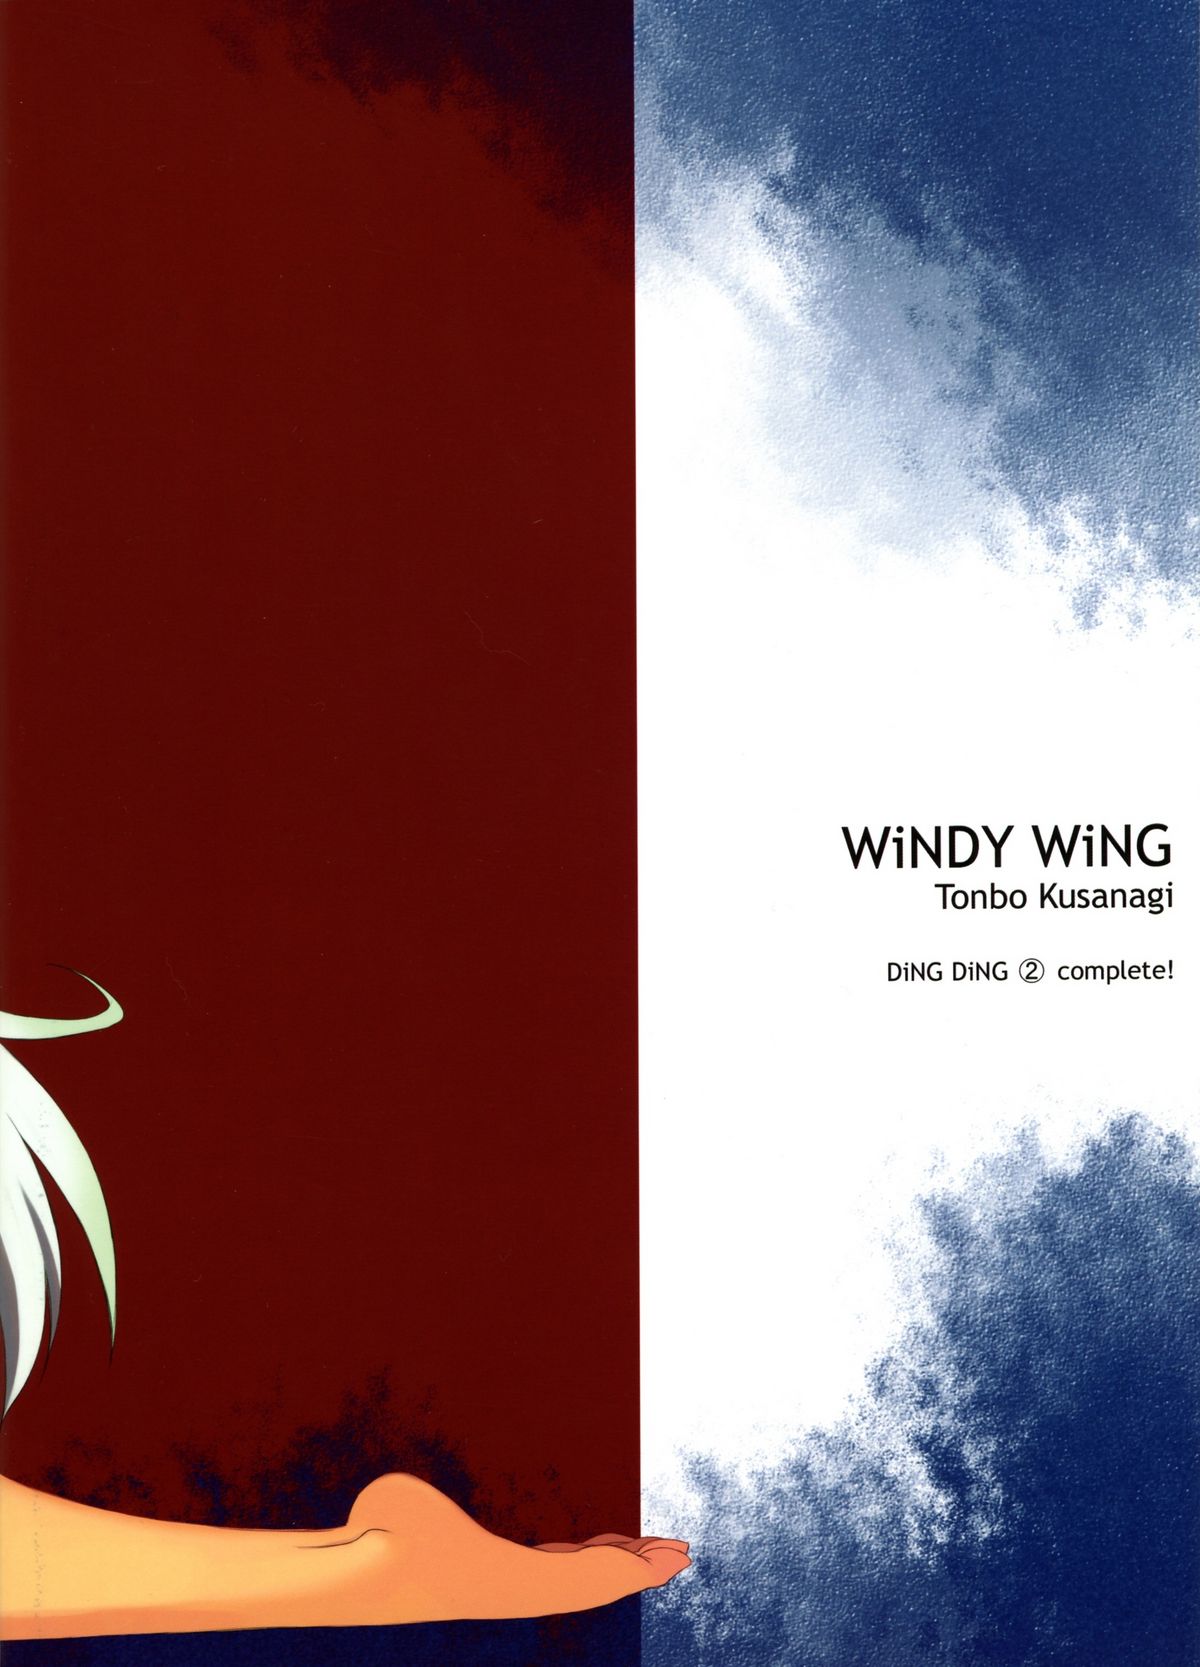 Tonbo Kusanagi (Windy Wing) - Ding Ding 2 Complete [Hi-Res] 